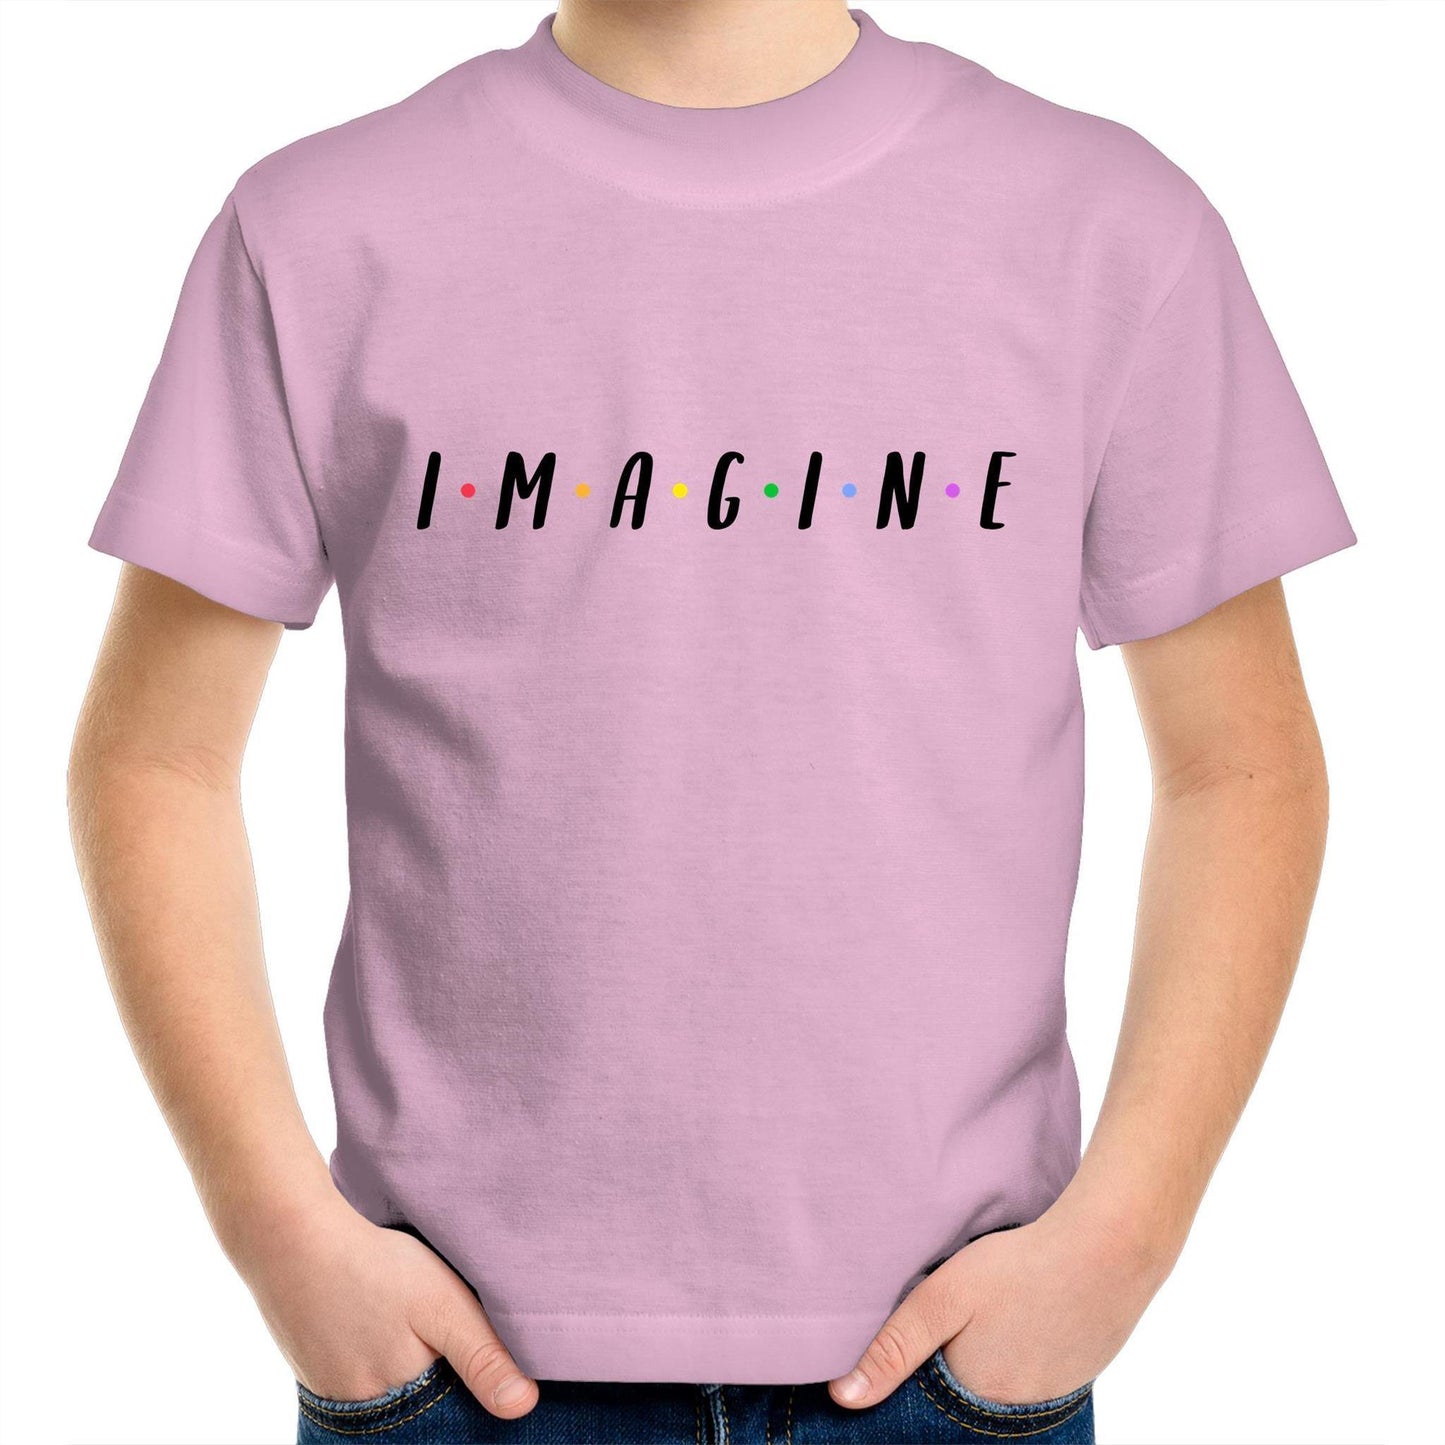 Imagine - Kids Youth Crew T-Shirt Pink Kids Youth T-shirt